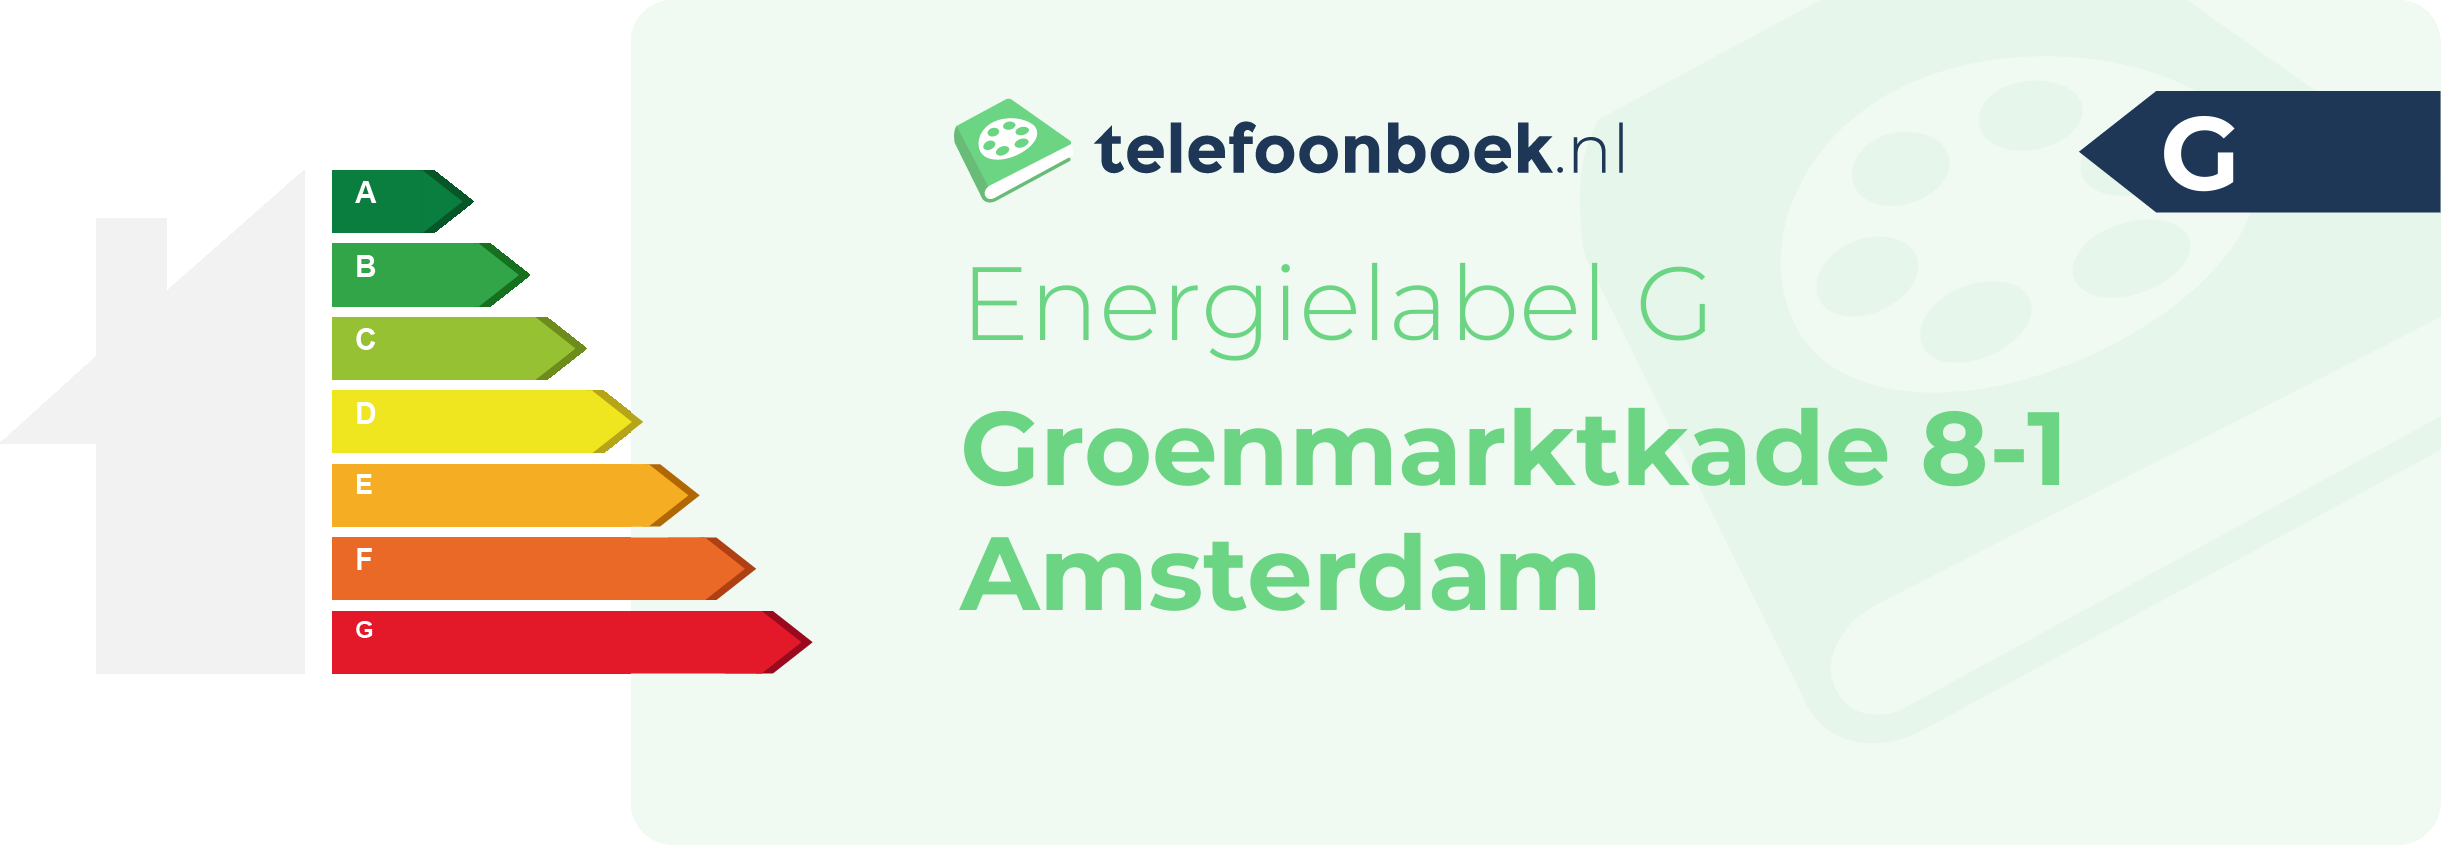 Energielabel Groenmarktkade 8-1 Amsterdam